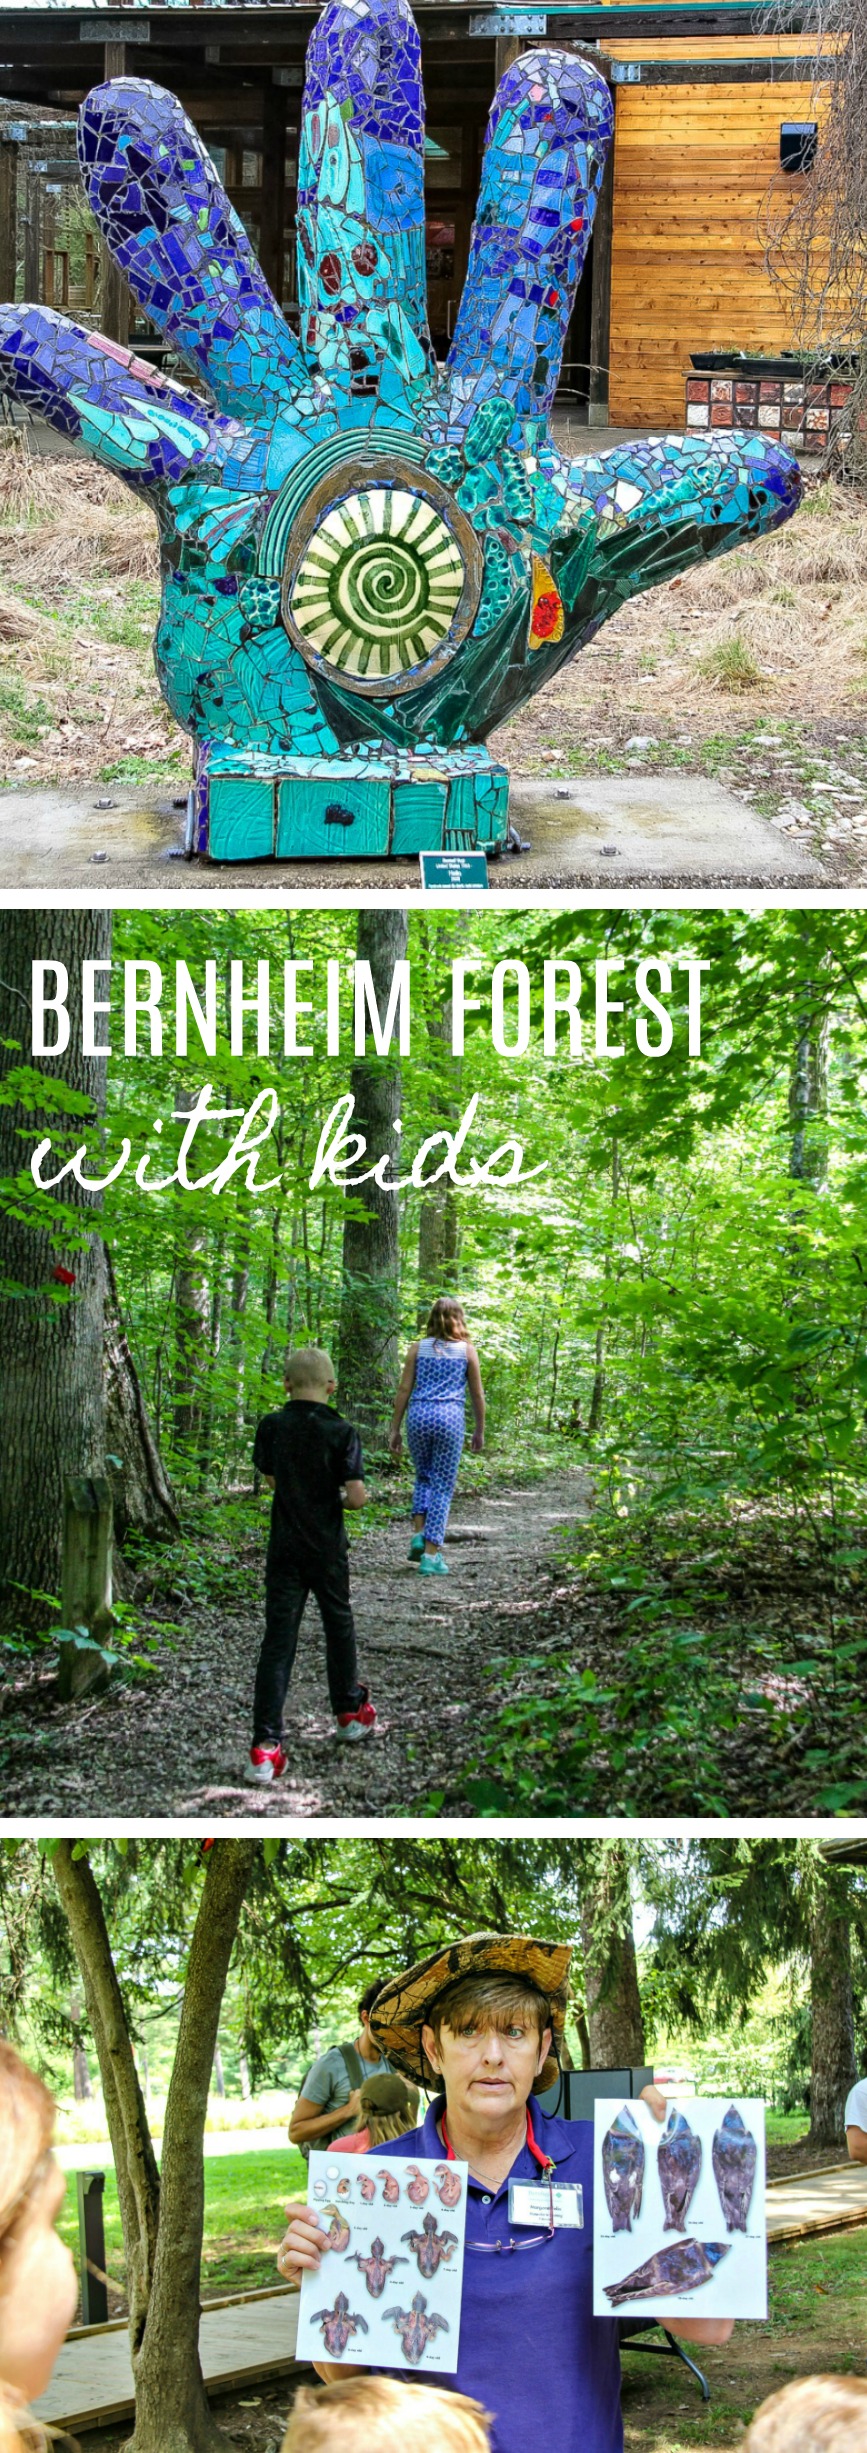 Bernheim forest Pinterest image